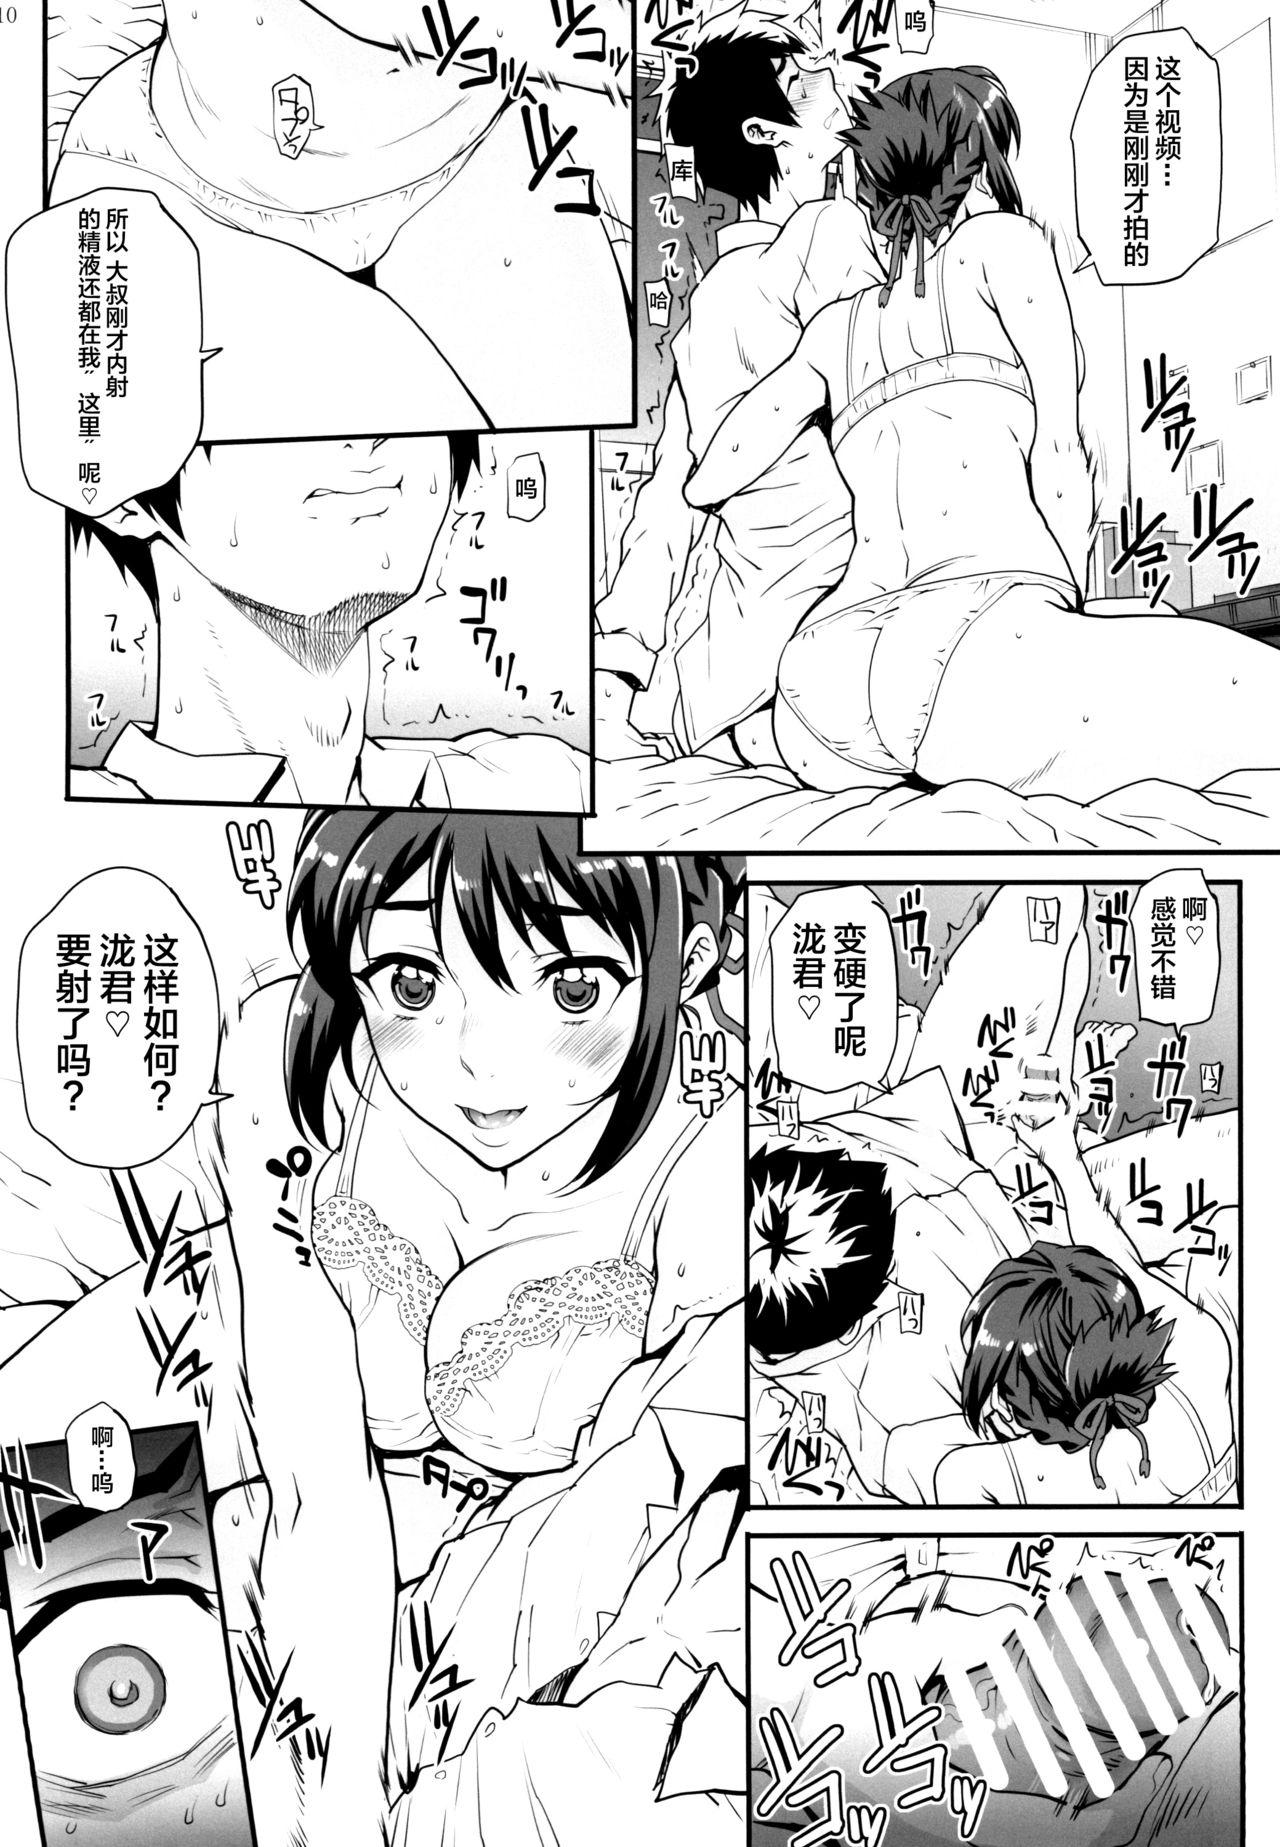 Head Kimi no Janai. Zoku - Kimi no na wa. Chastity - Page 12